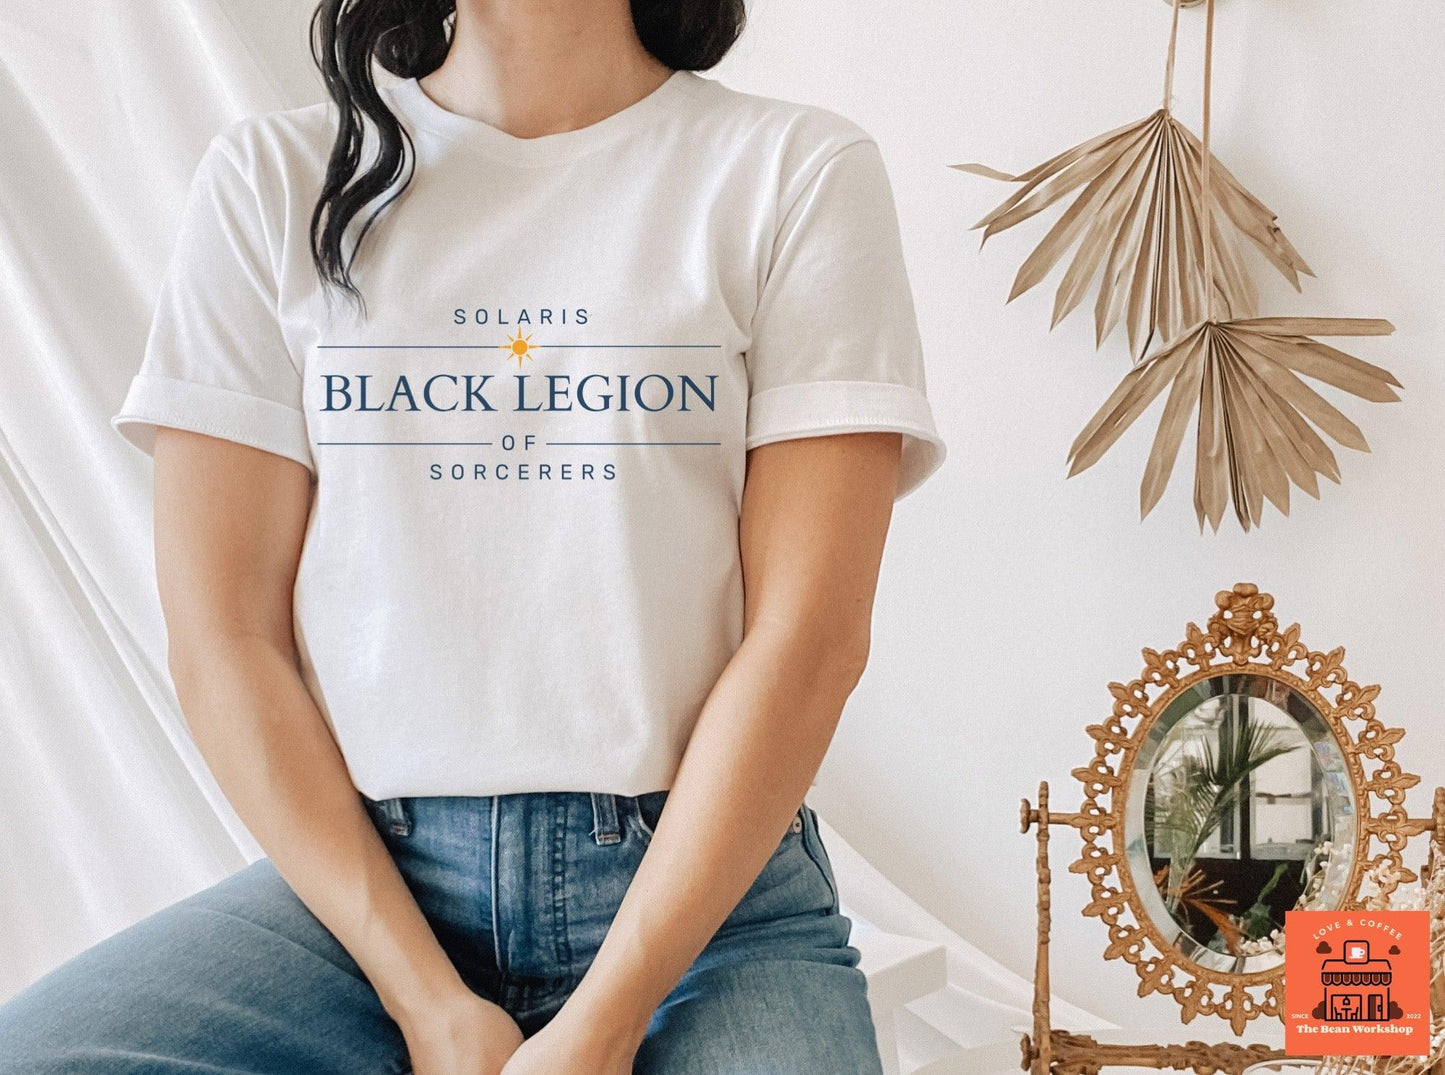 Black Legion Sorcerer Tee Shirt - The Bean Workshop - air awakens, elise kova, t-shirt